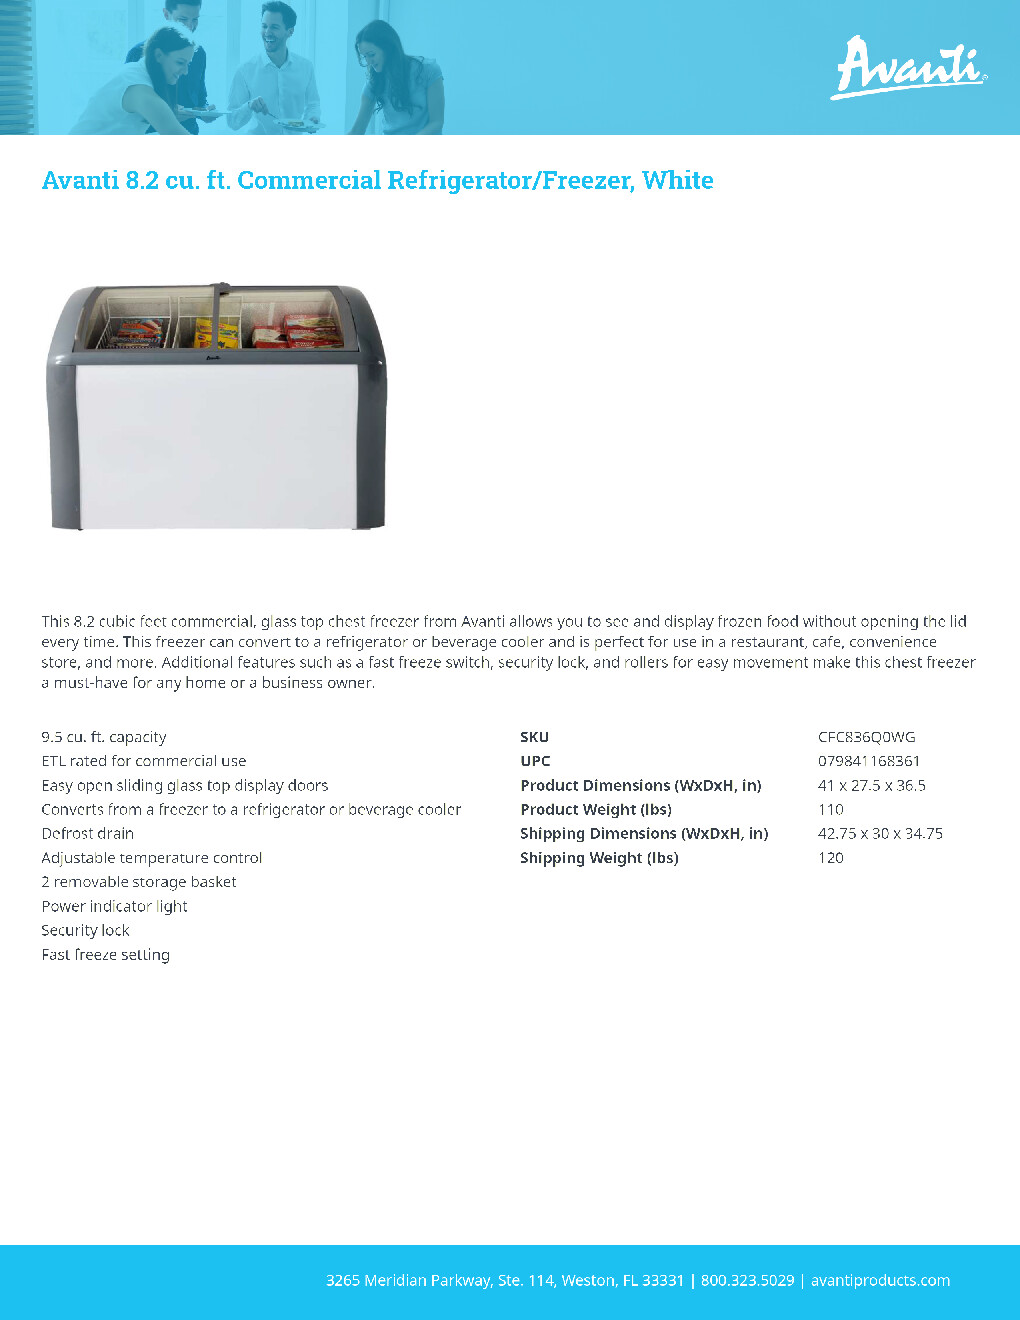 Avanti CFC836Q0WG Convertible Refrigerator Freezer